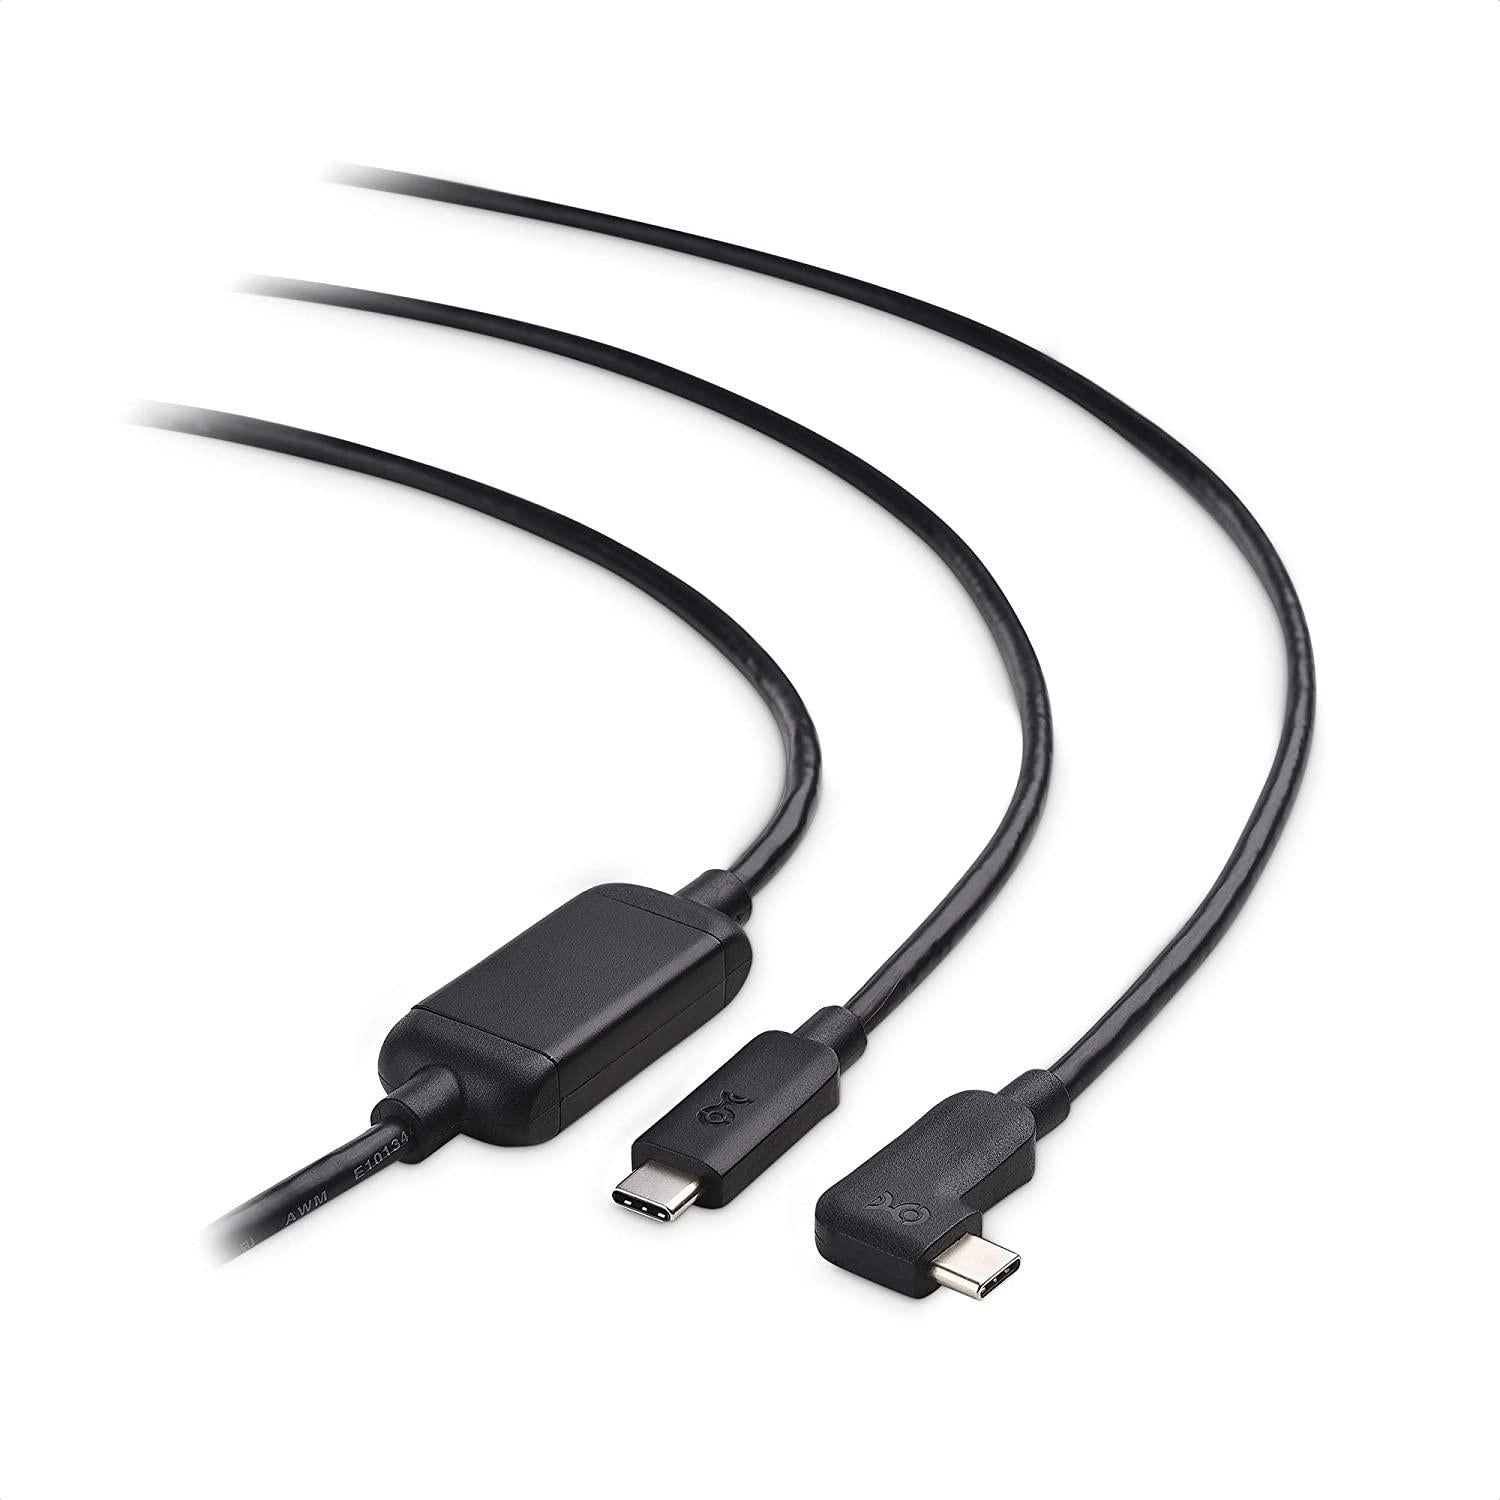 Cable Matters aktiivinen 75 m USB-C–USB-C VR Link -kaapeli Oculus Quest 2:lle USB3.2 Gen1 5 Gbps 3A Super Speed VR Link -kaapeli